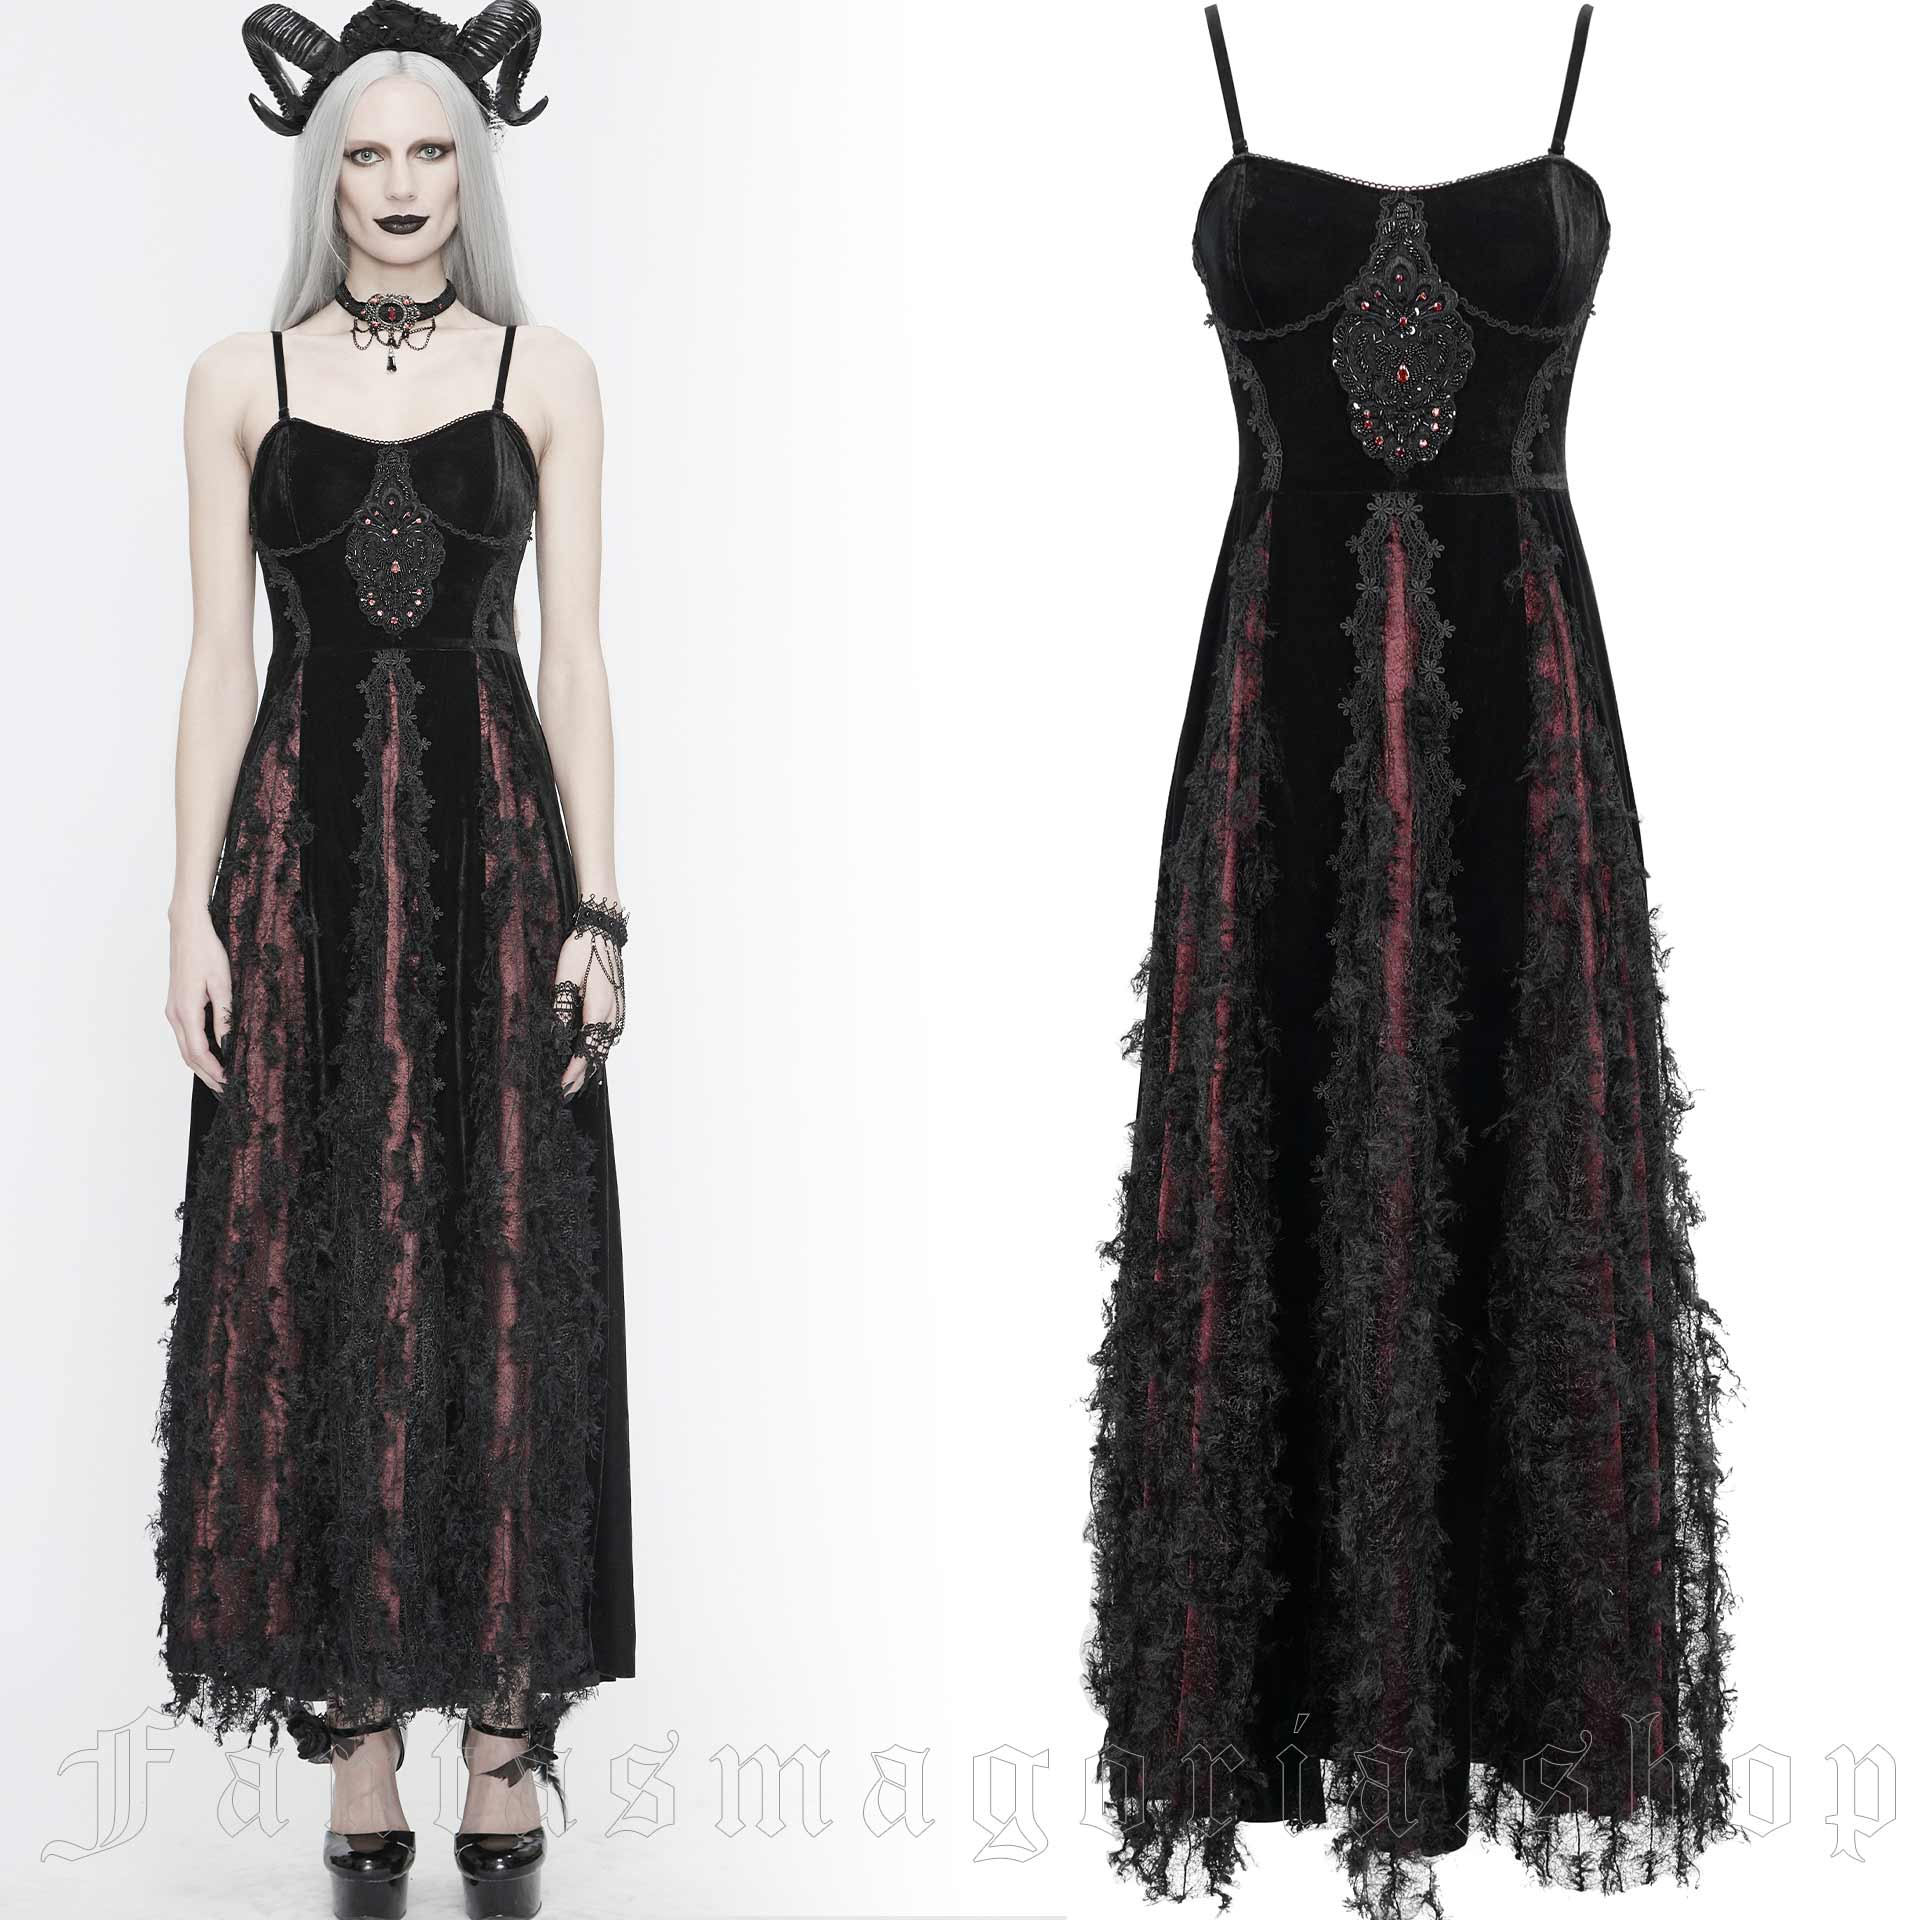 Vampire's Masquerade Dress - Eva Lady - ESKT032 1